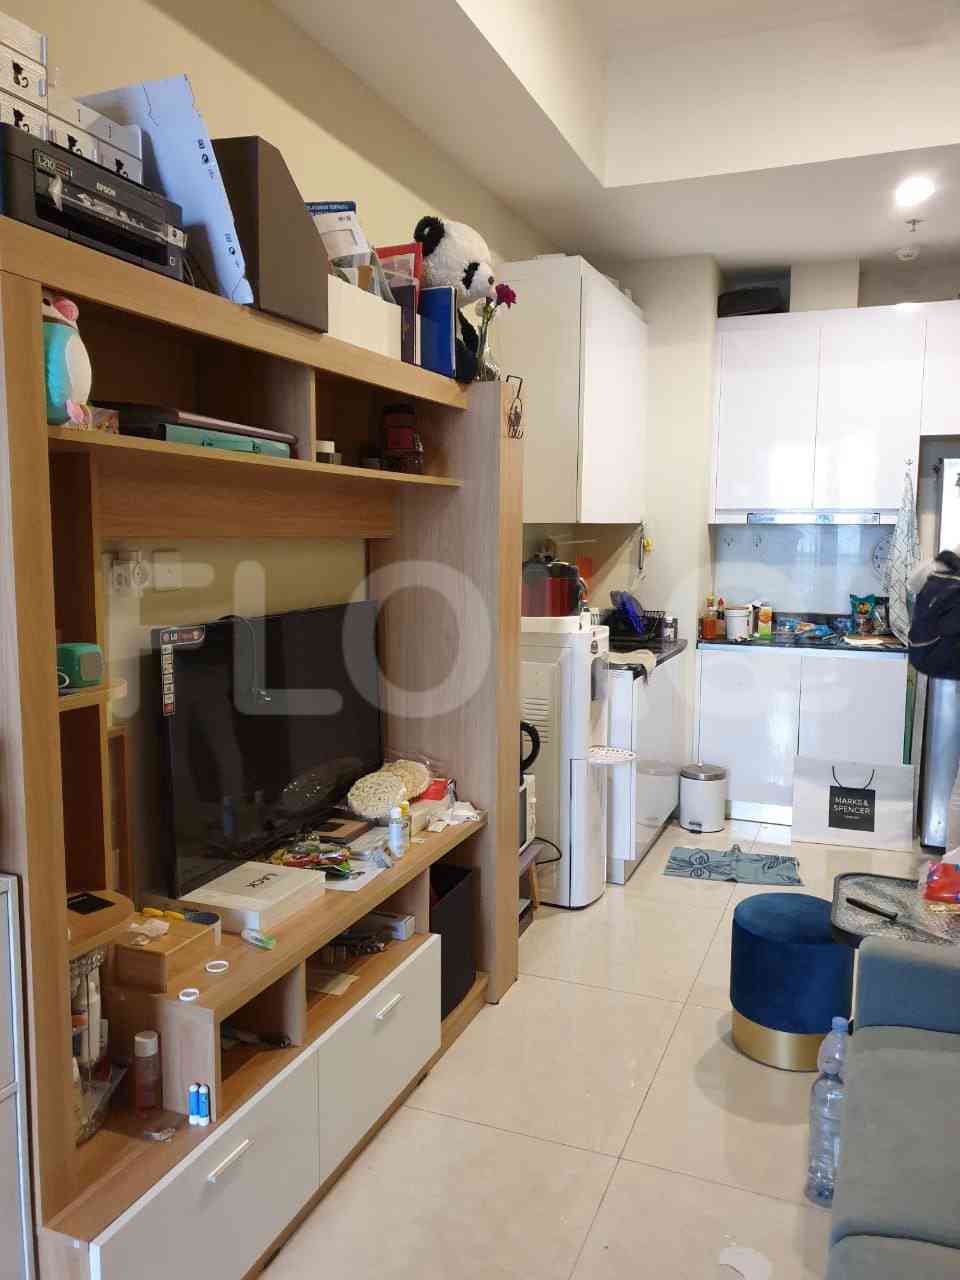 2 Bedroom on 25th Floor for Rent in Taman Anggrek Residence - fta3fb 2